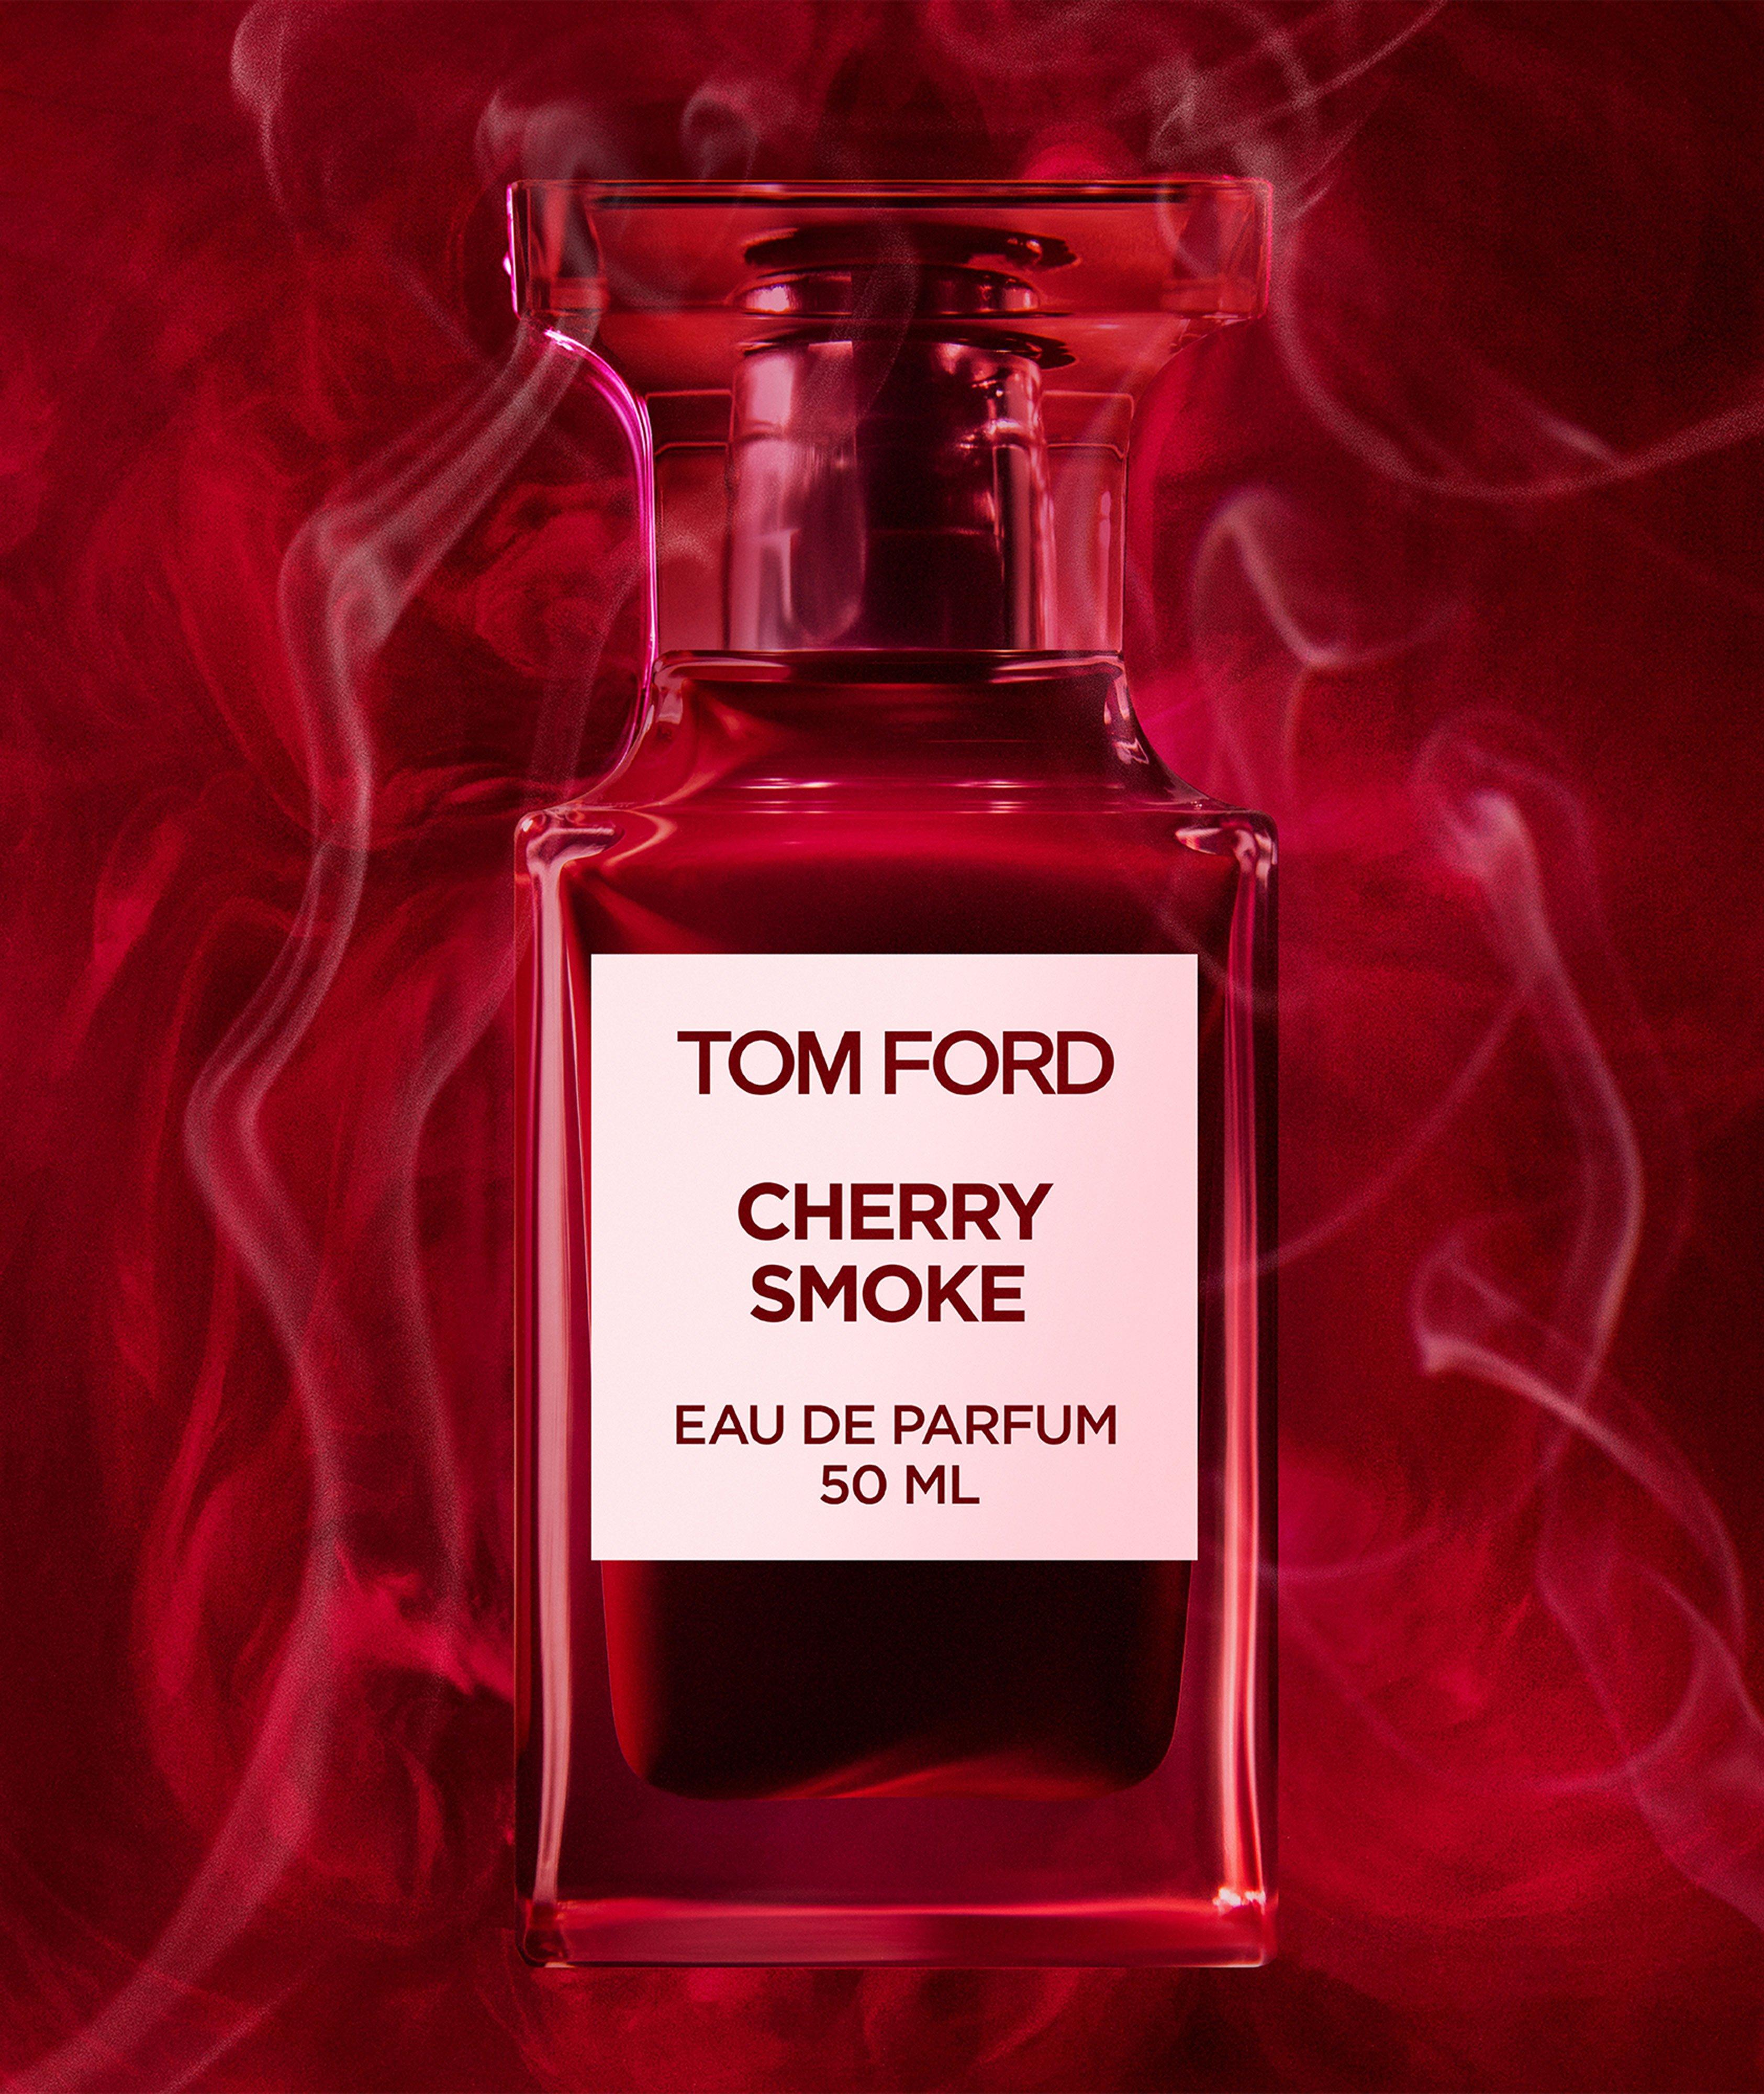 Eau de parfum Cherry Smoke (50 ml) image 2